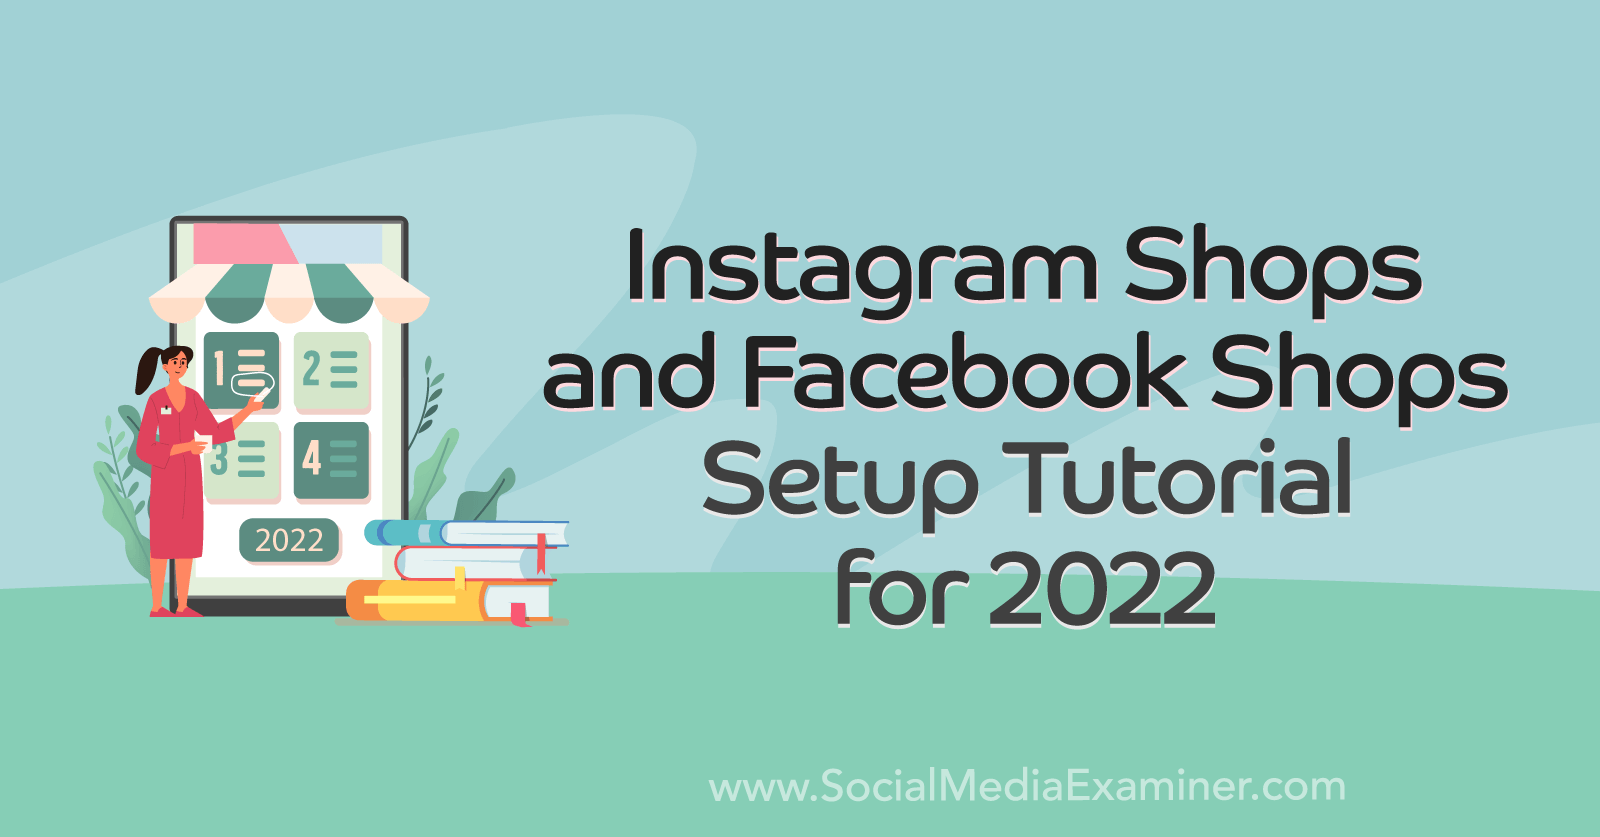 Instagram Shops and Facebook Shops Setup Tutorial for 2022 by Anna Sonnenberg